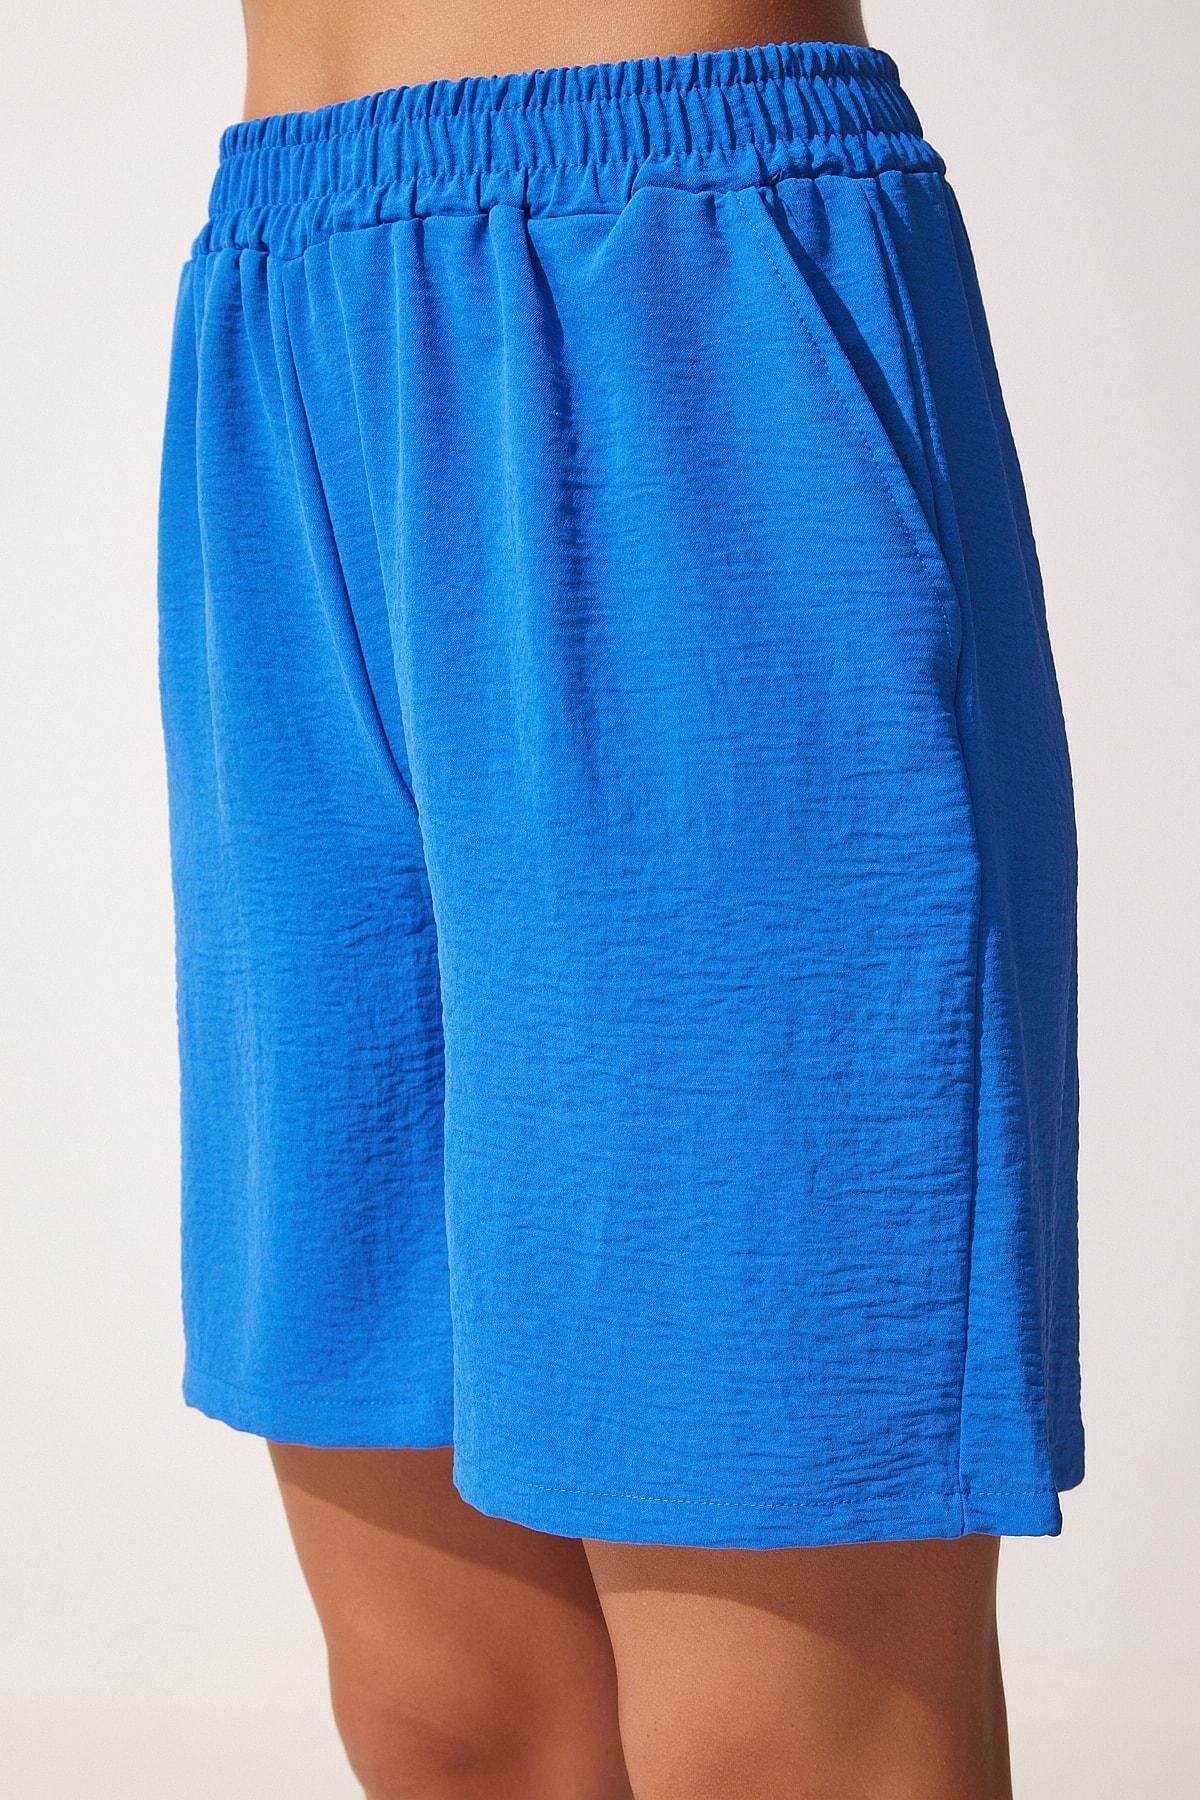 Happiness Istanbul - Blue Flowy Kimono Shorts, Set Of 2